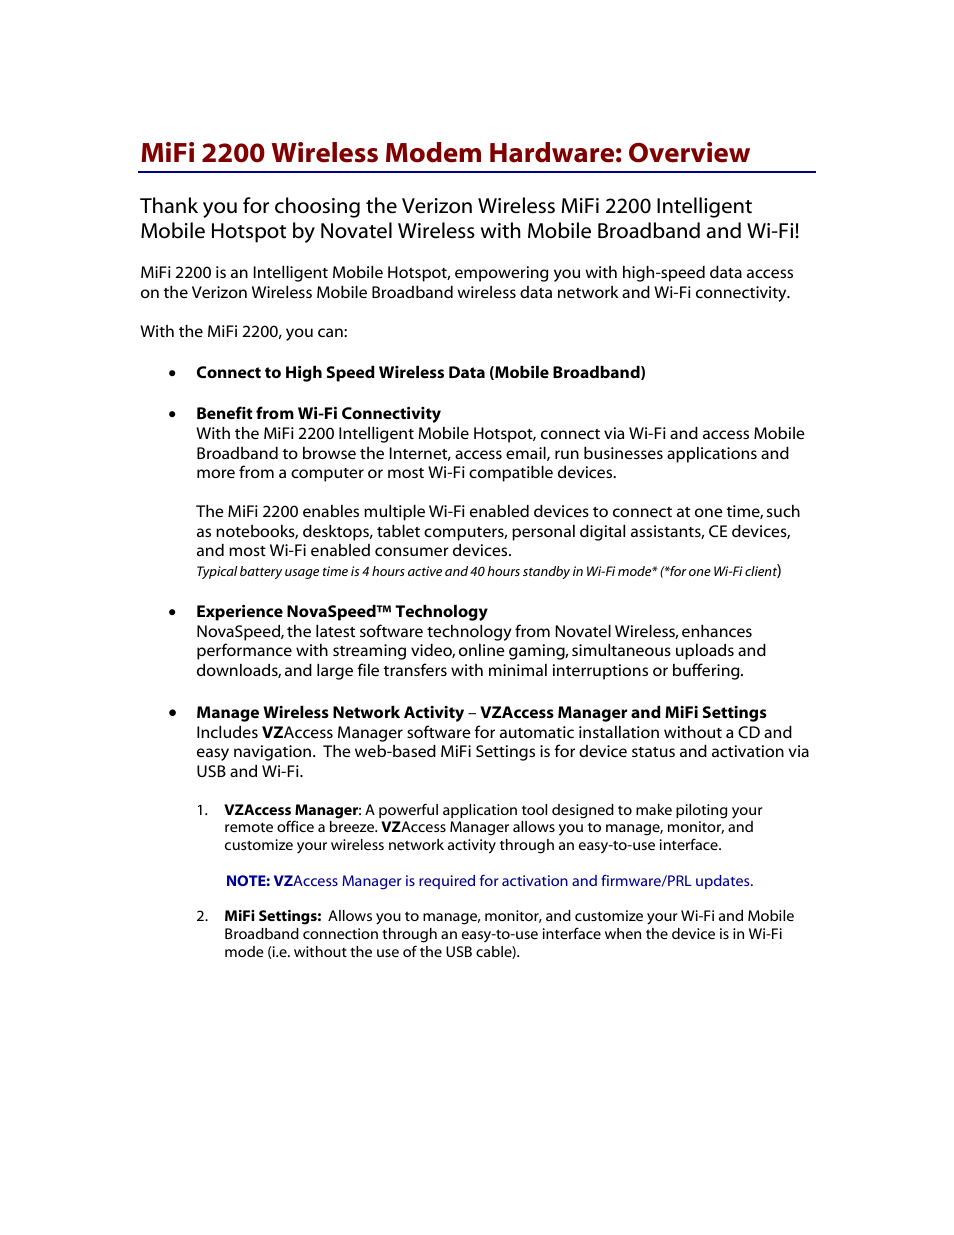 Mifi 2200 wireless modem hardware: overview | Verizon MiFi 2200 User Manual | Page 6 / 50